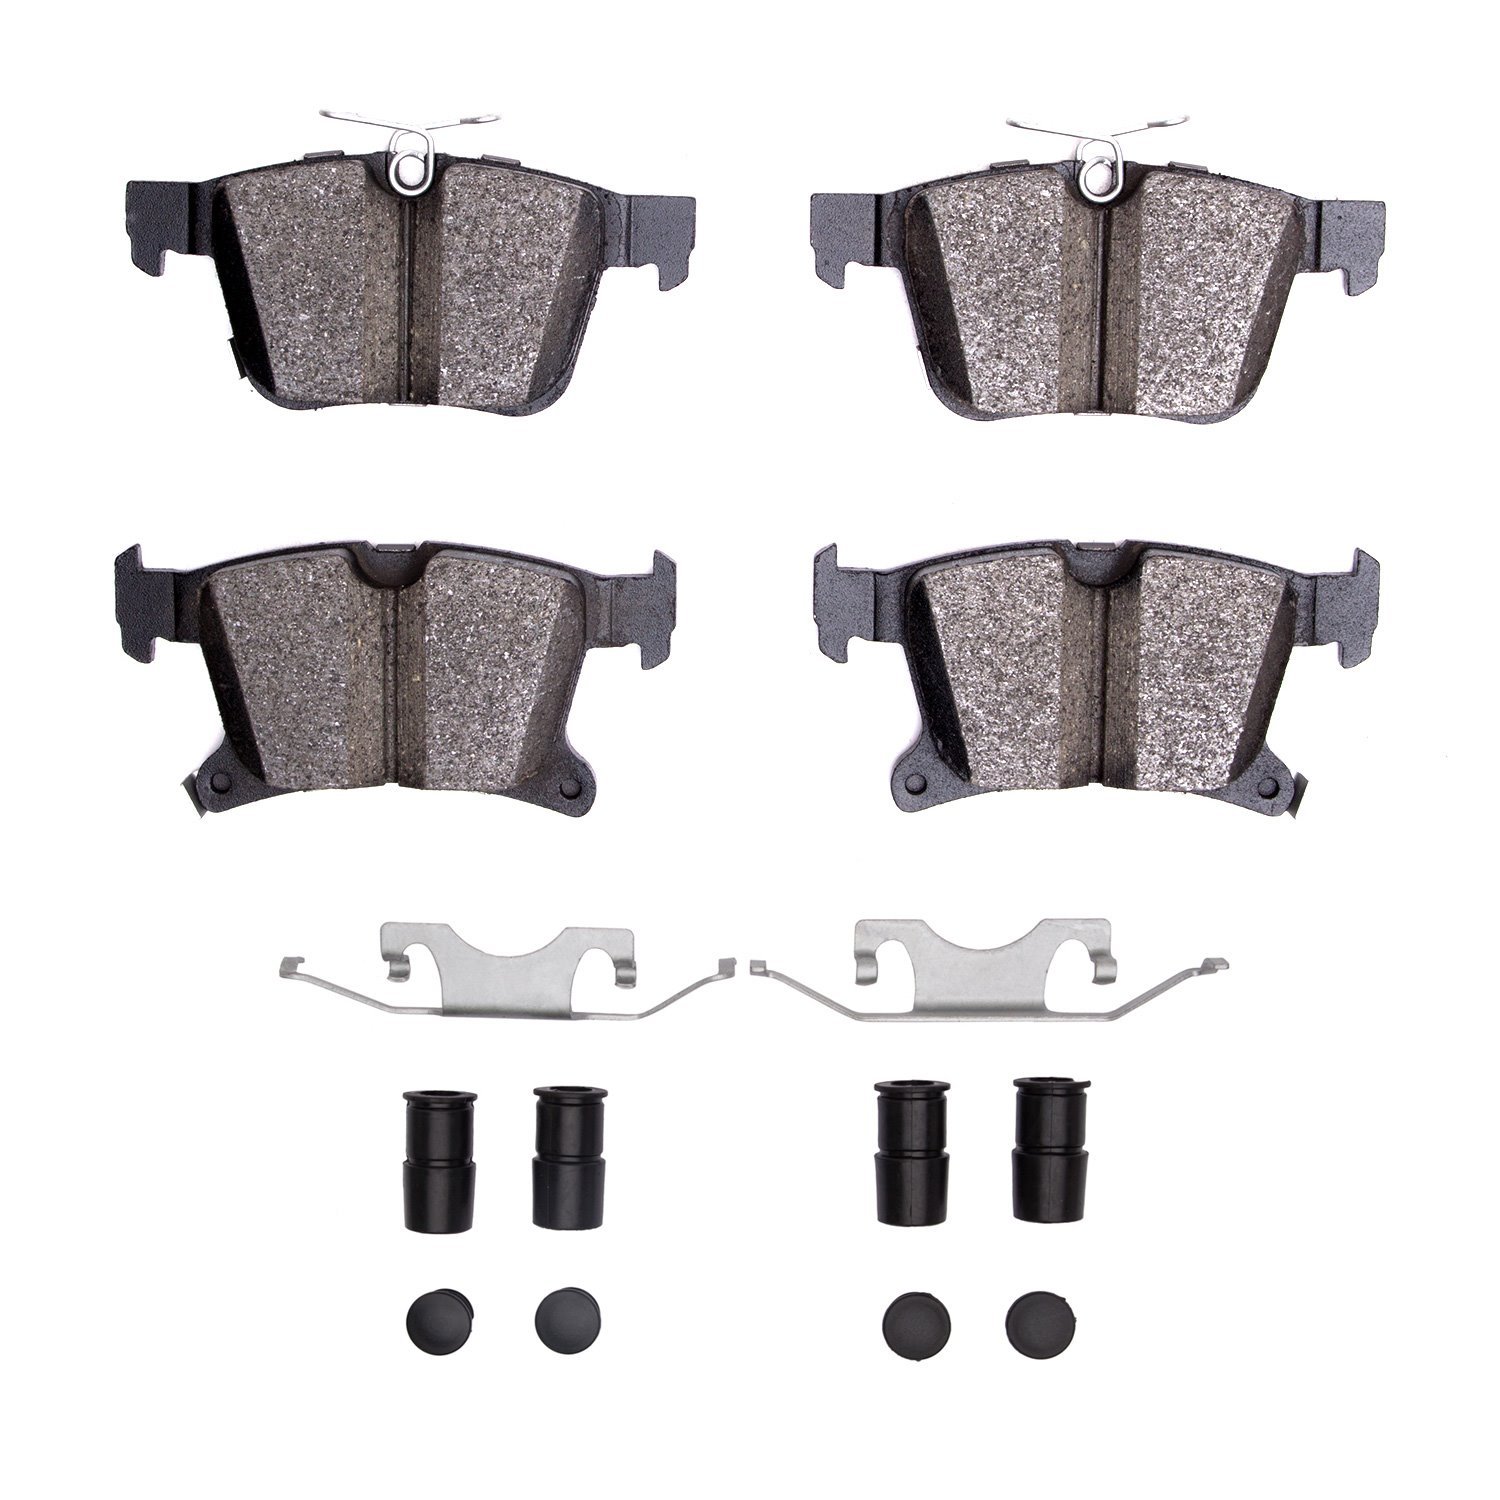 1551-1901-01 5000 Advanced Ceramic Brake Pads & Hardware Kit, Fits Select Mopar, Position: Rear